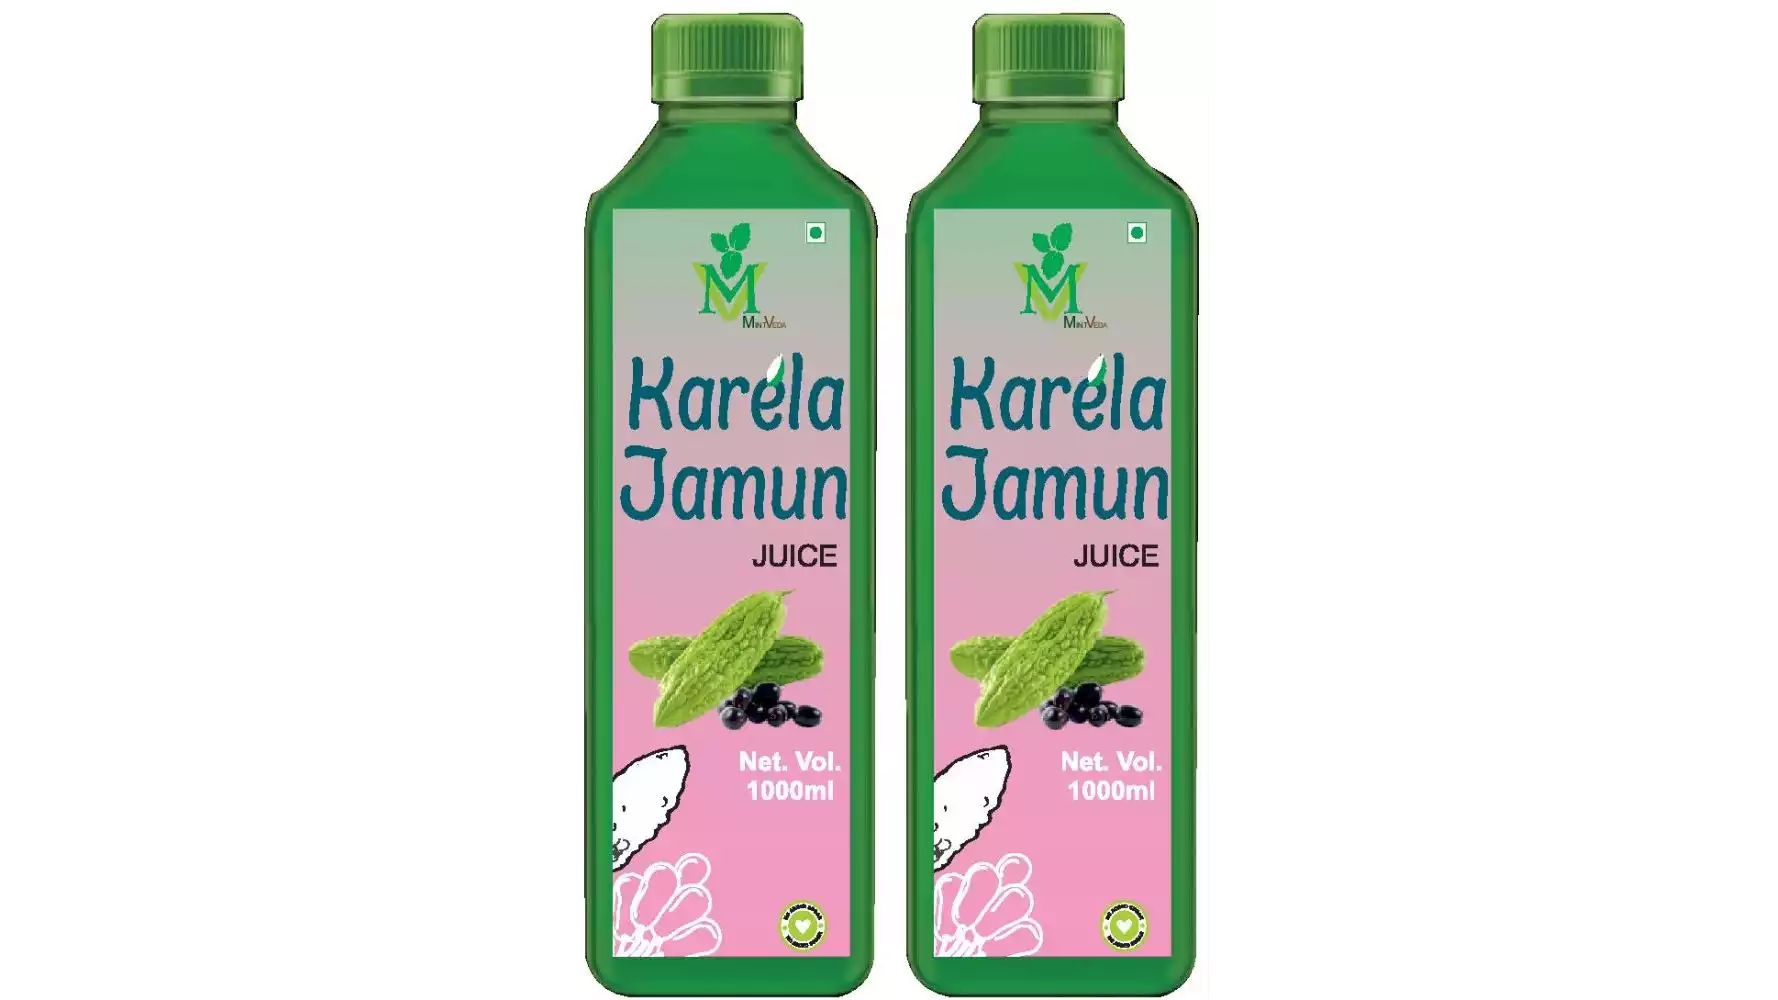 Mint Veda Karela Jamun (Sugar Free) Juice (1liter, Pack of 2)